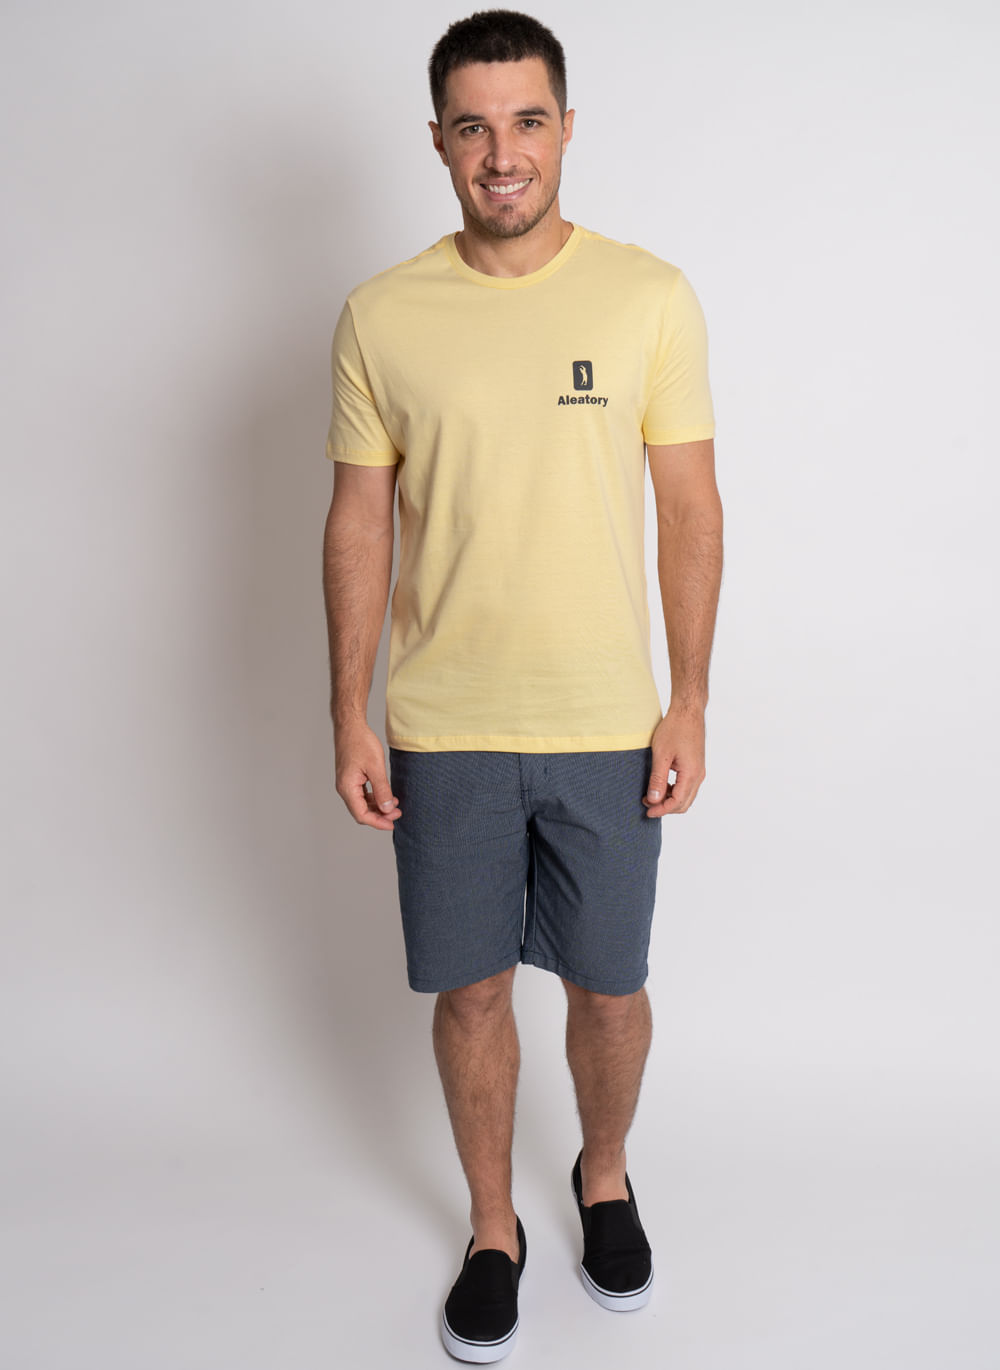 Camiseta-Aleatory-Estampada-Rubber-Amarela-Amarelo-P